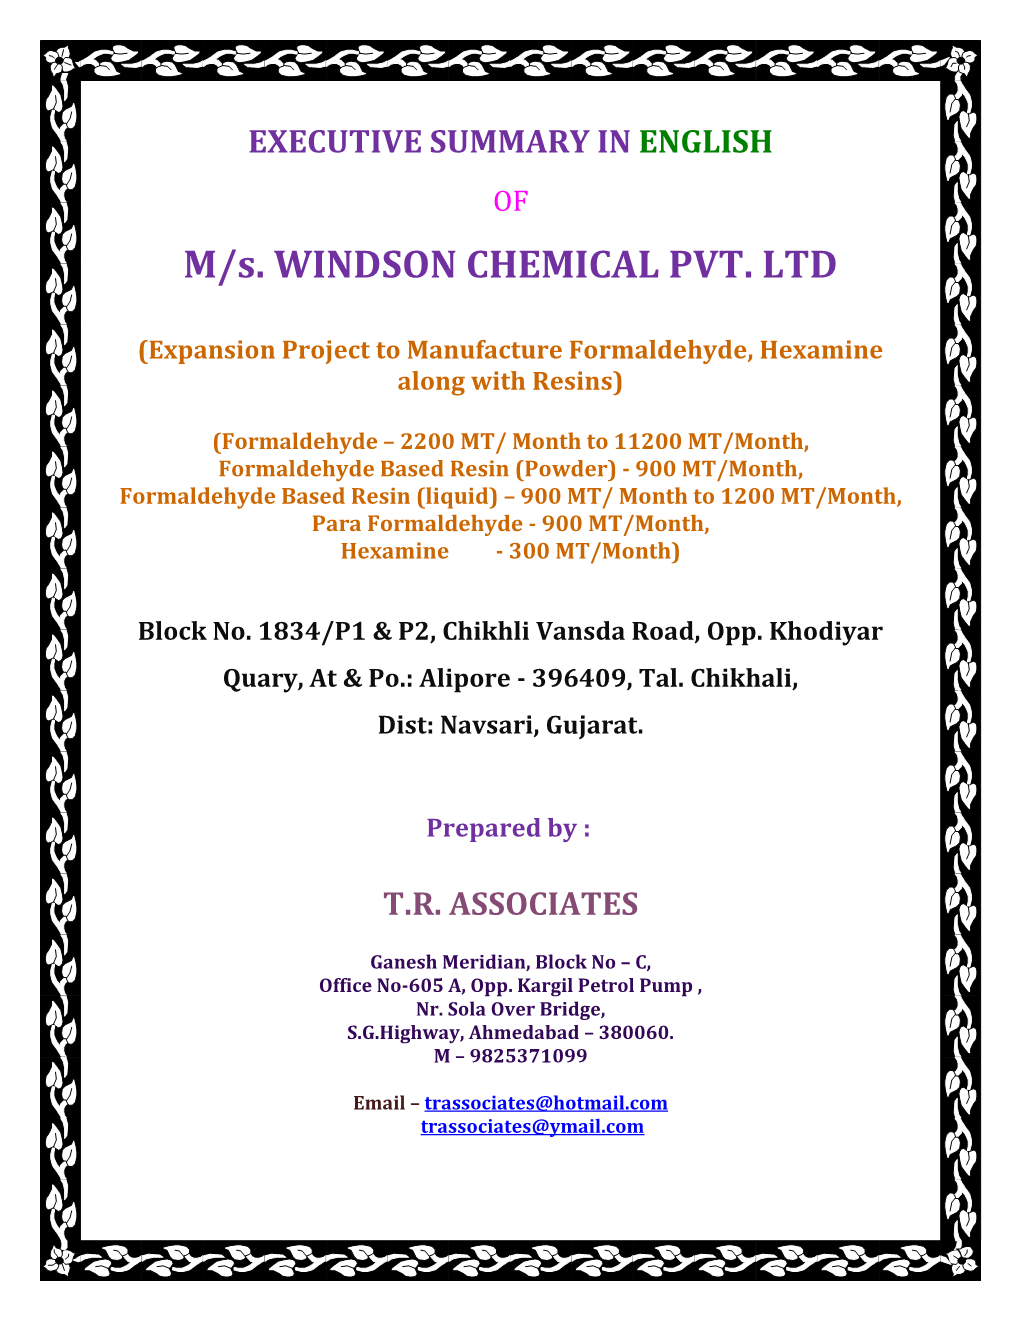 M/S. WINDSON CHEMICAL PVT. LTD